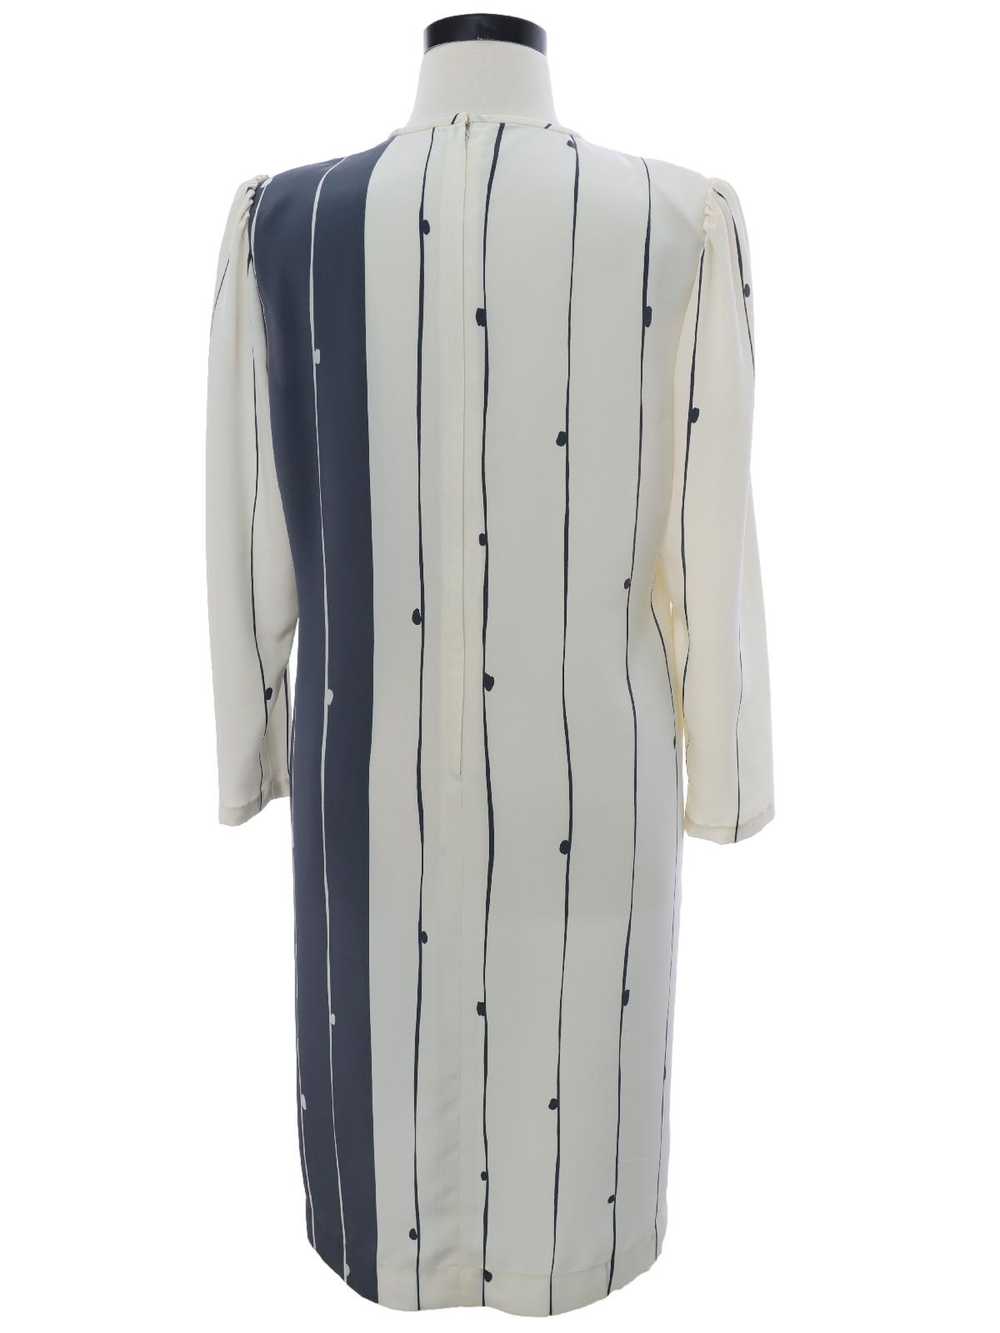 1970's Graff Secretary Style Dress - image 3